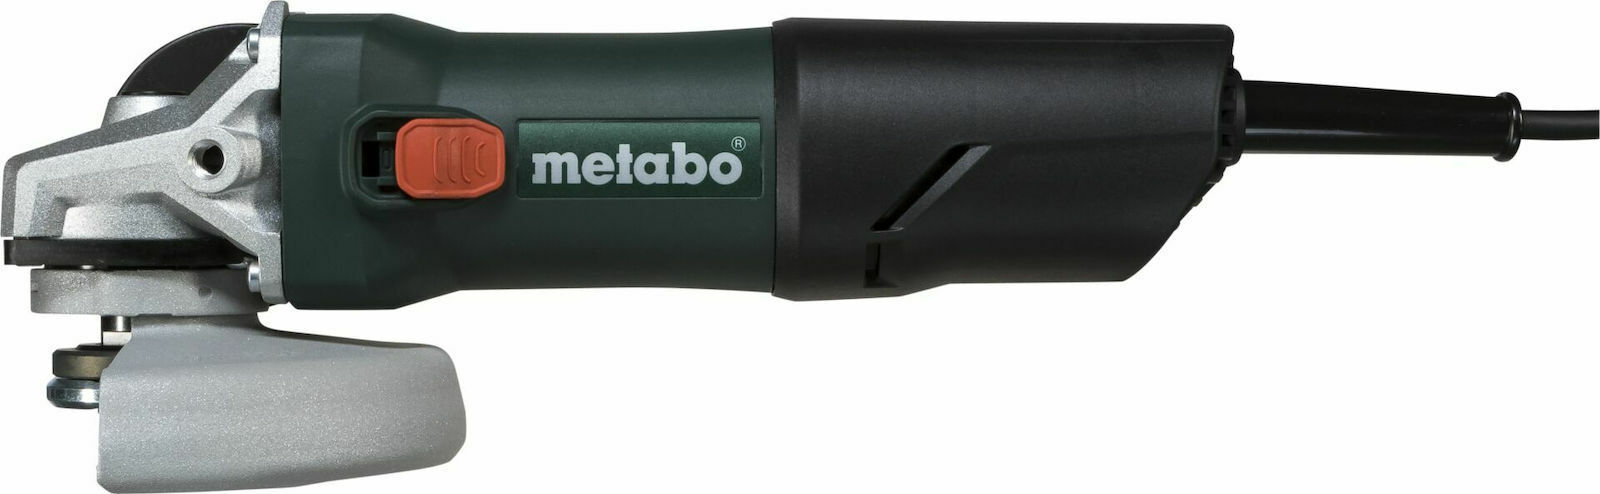 Metabo Meuleuse 125 mm WEV 850-125 - 850W - vitesse de rotation rég